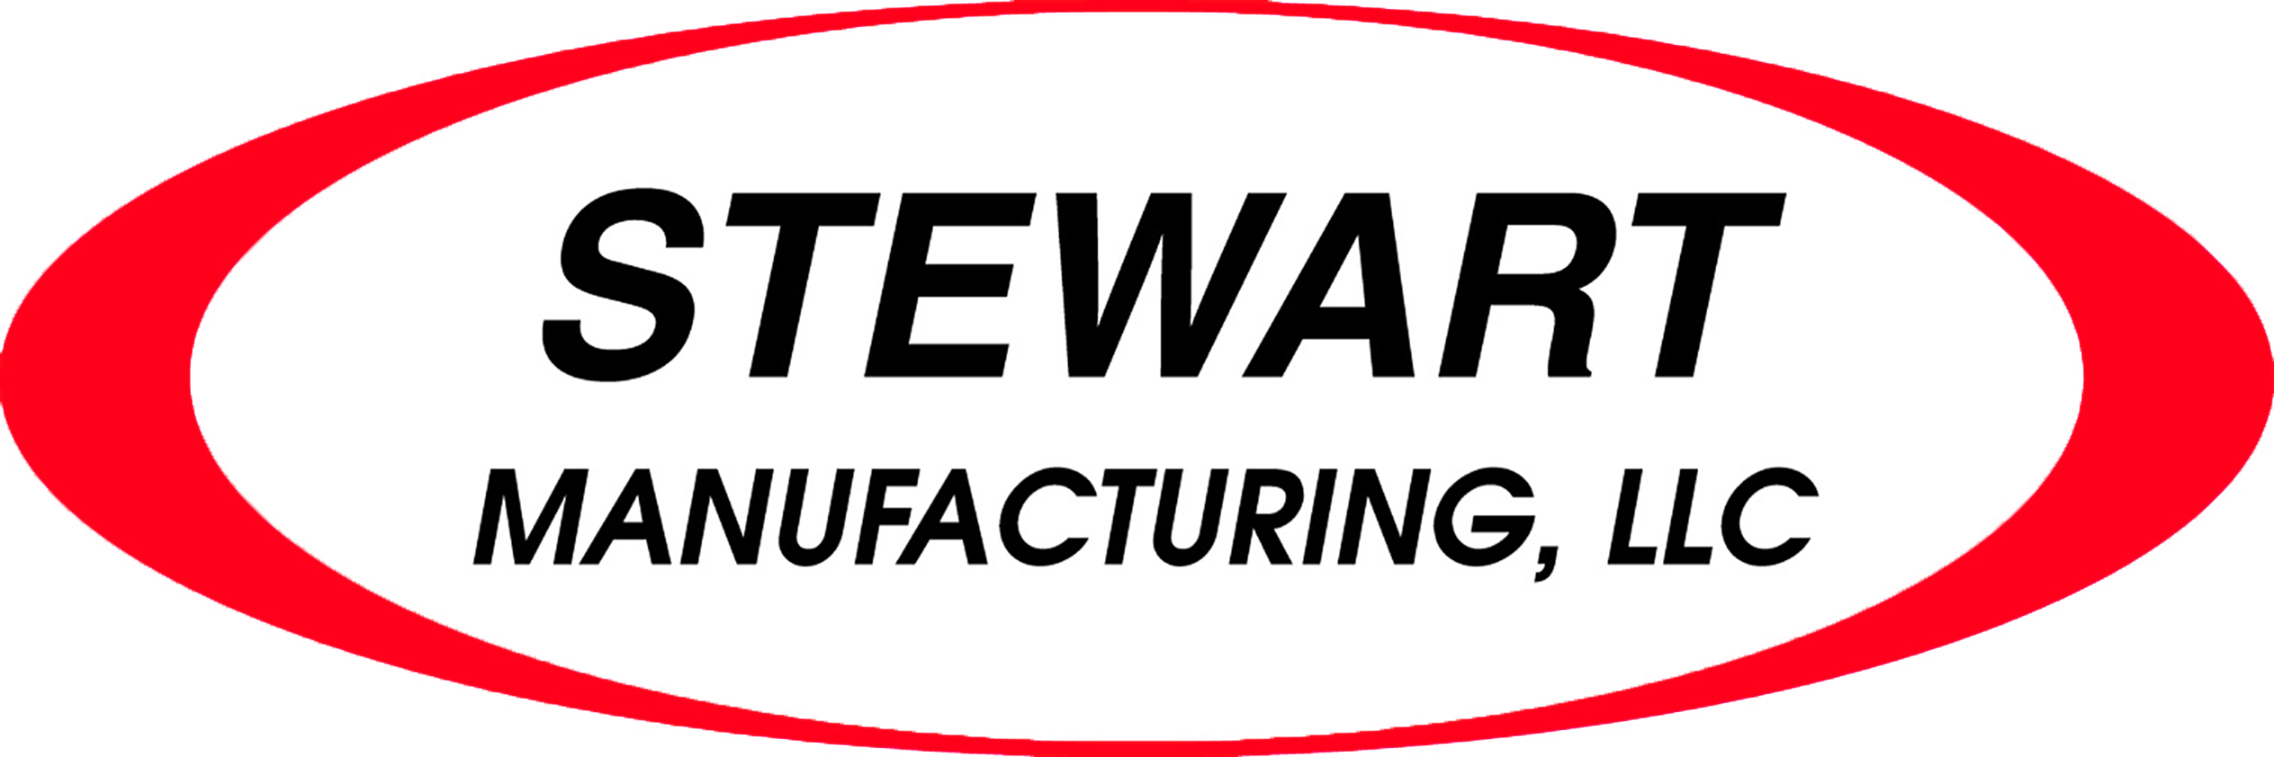 Stewart Manufacturing, LLC